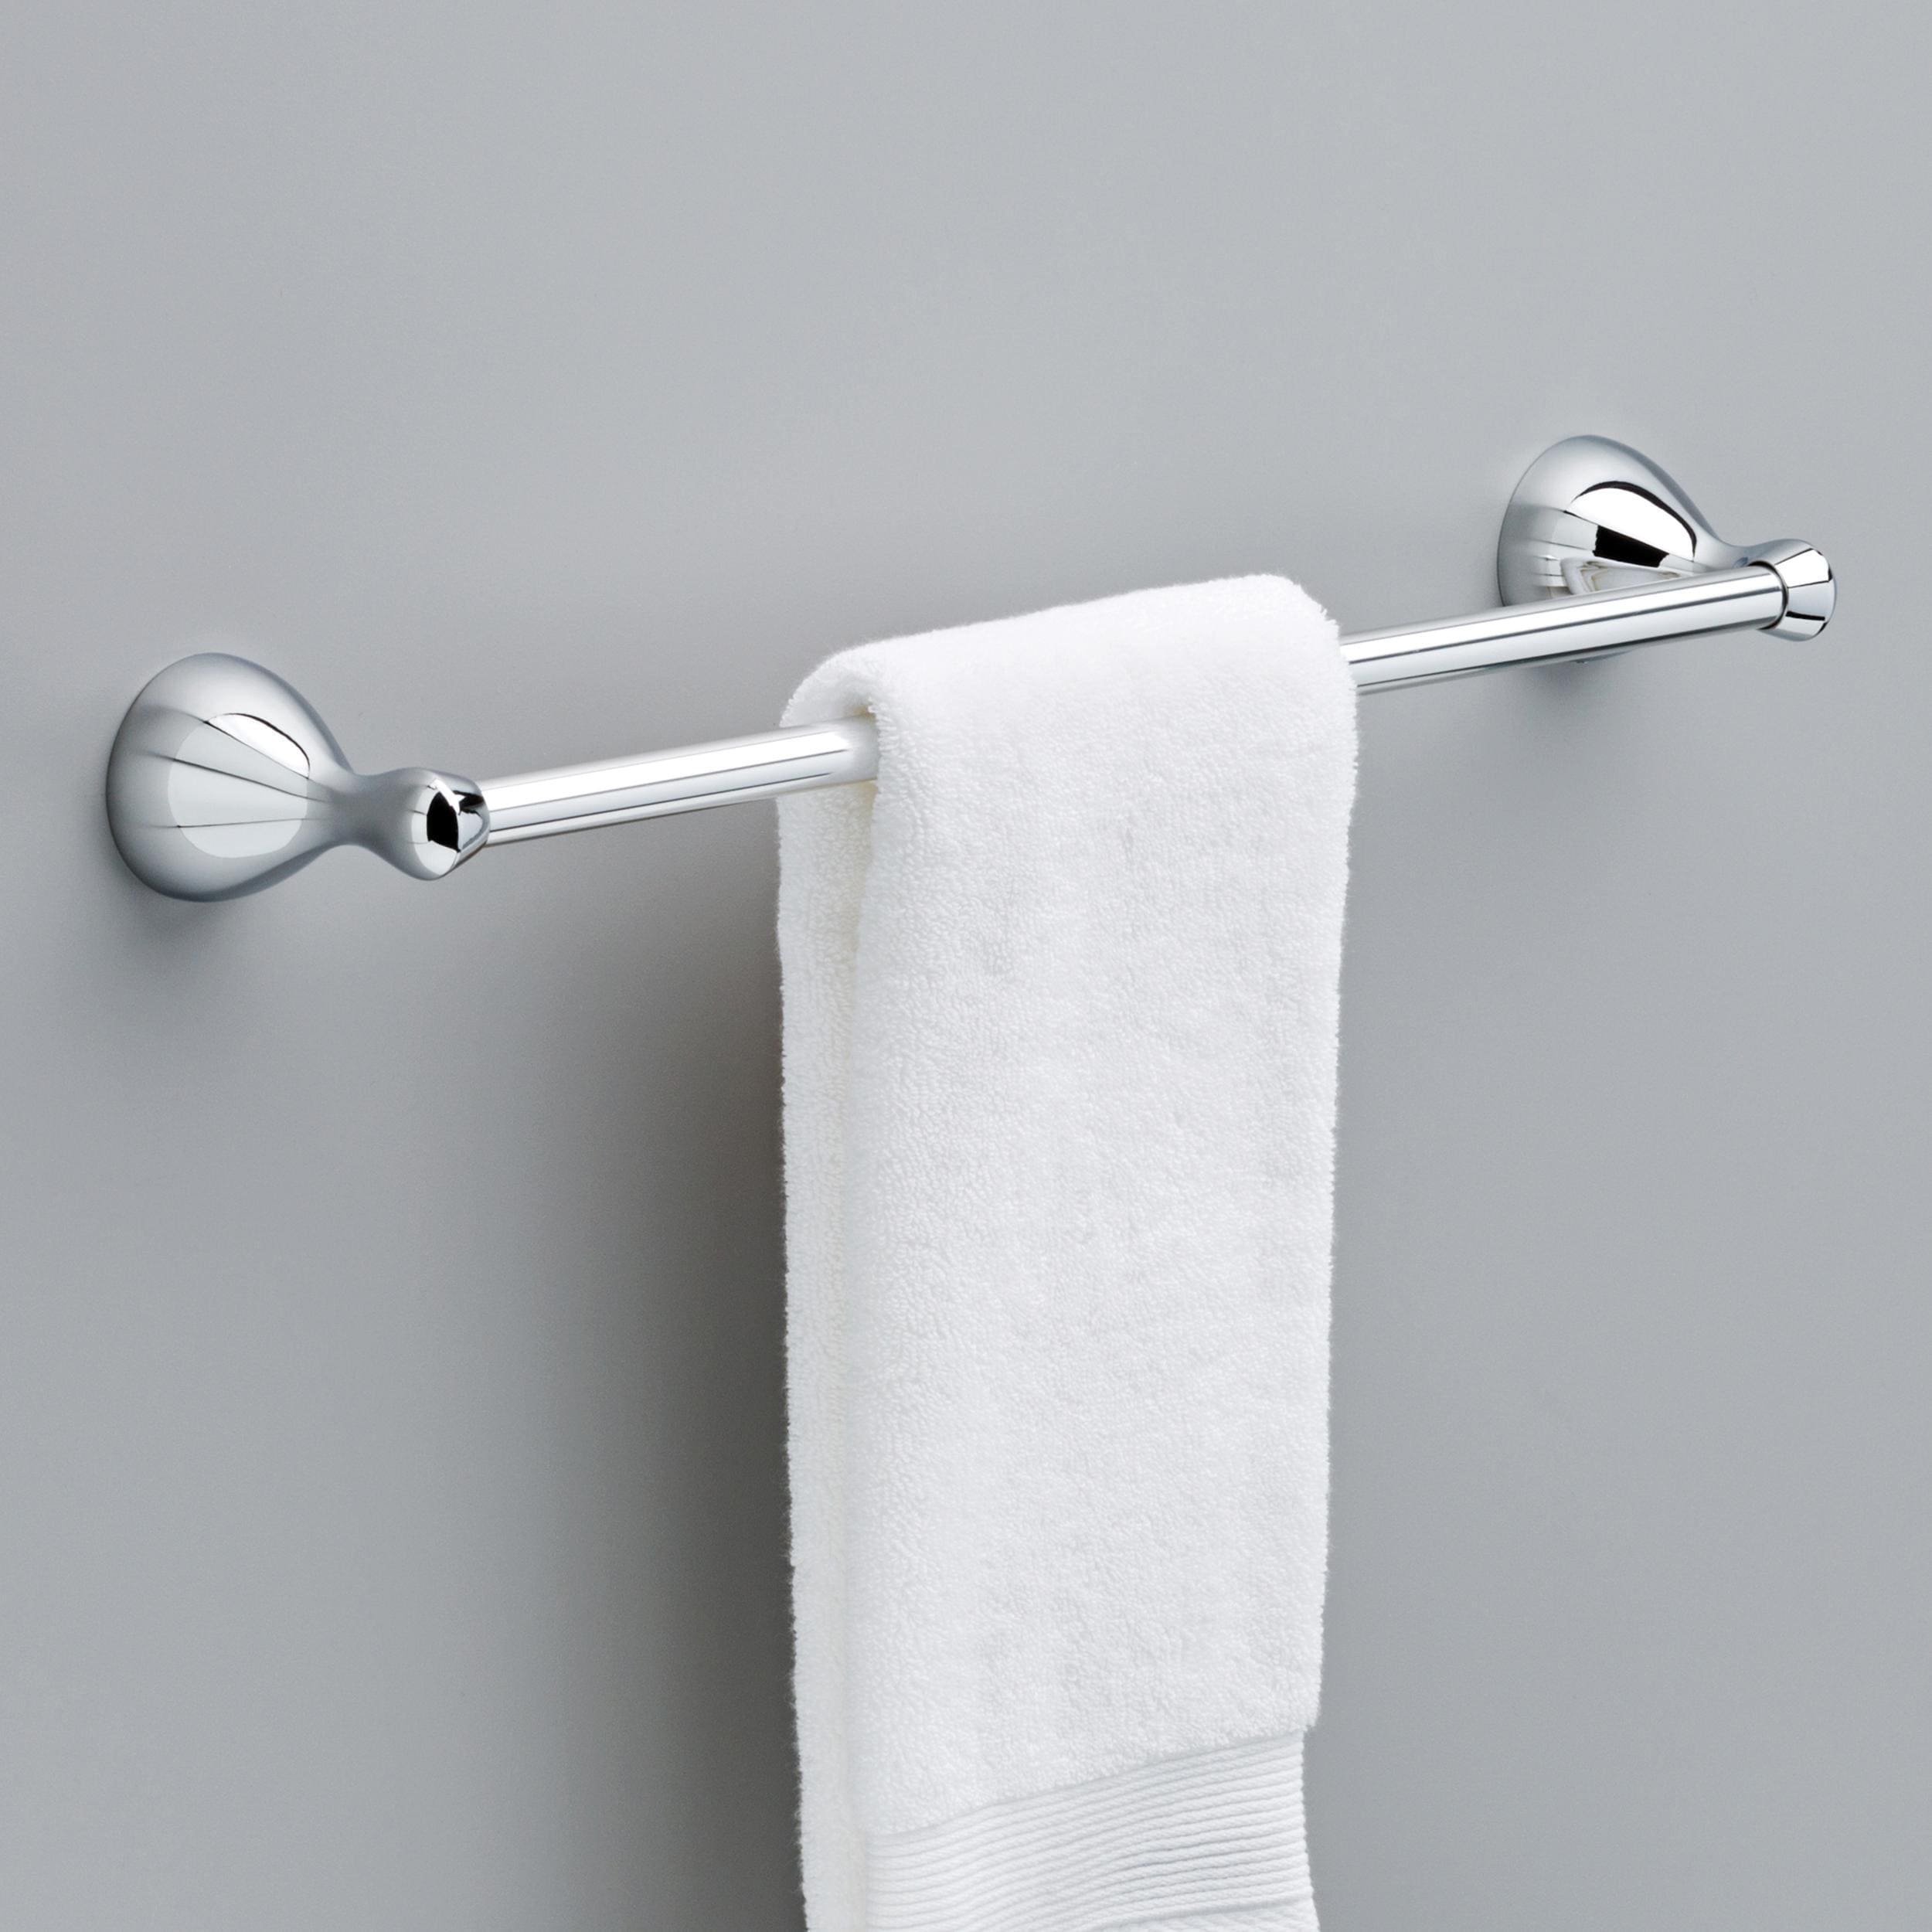  Towel Bars